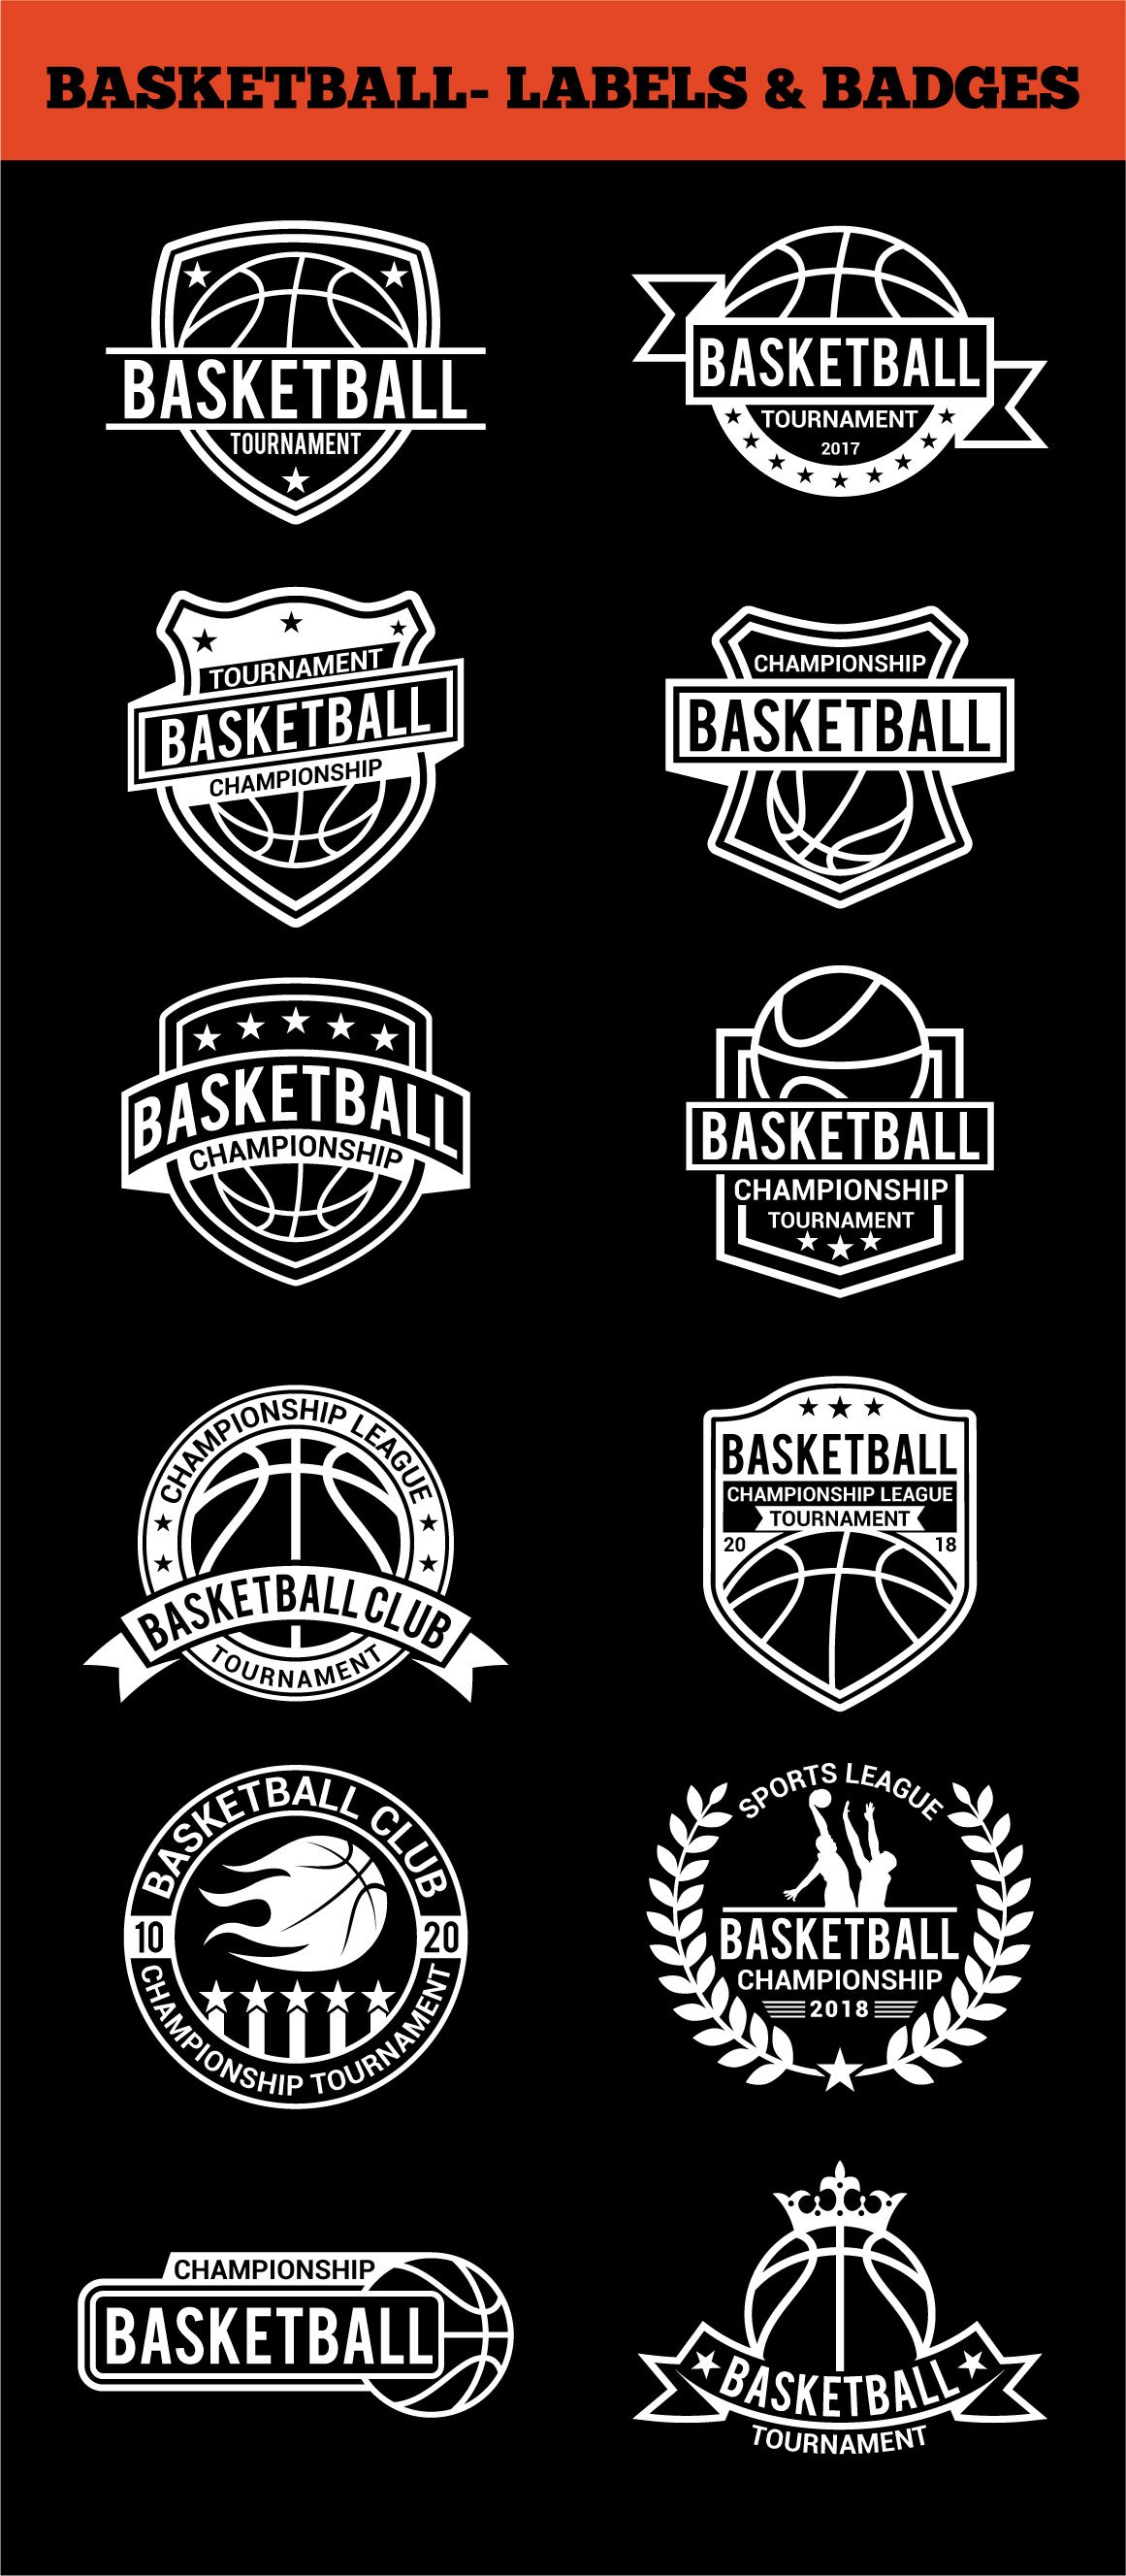 White basketball logos on a black background.